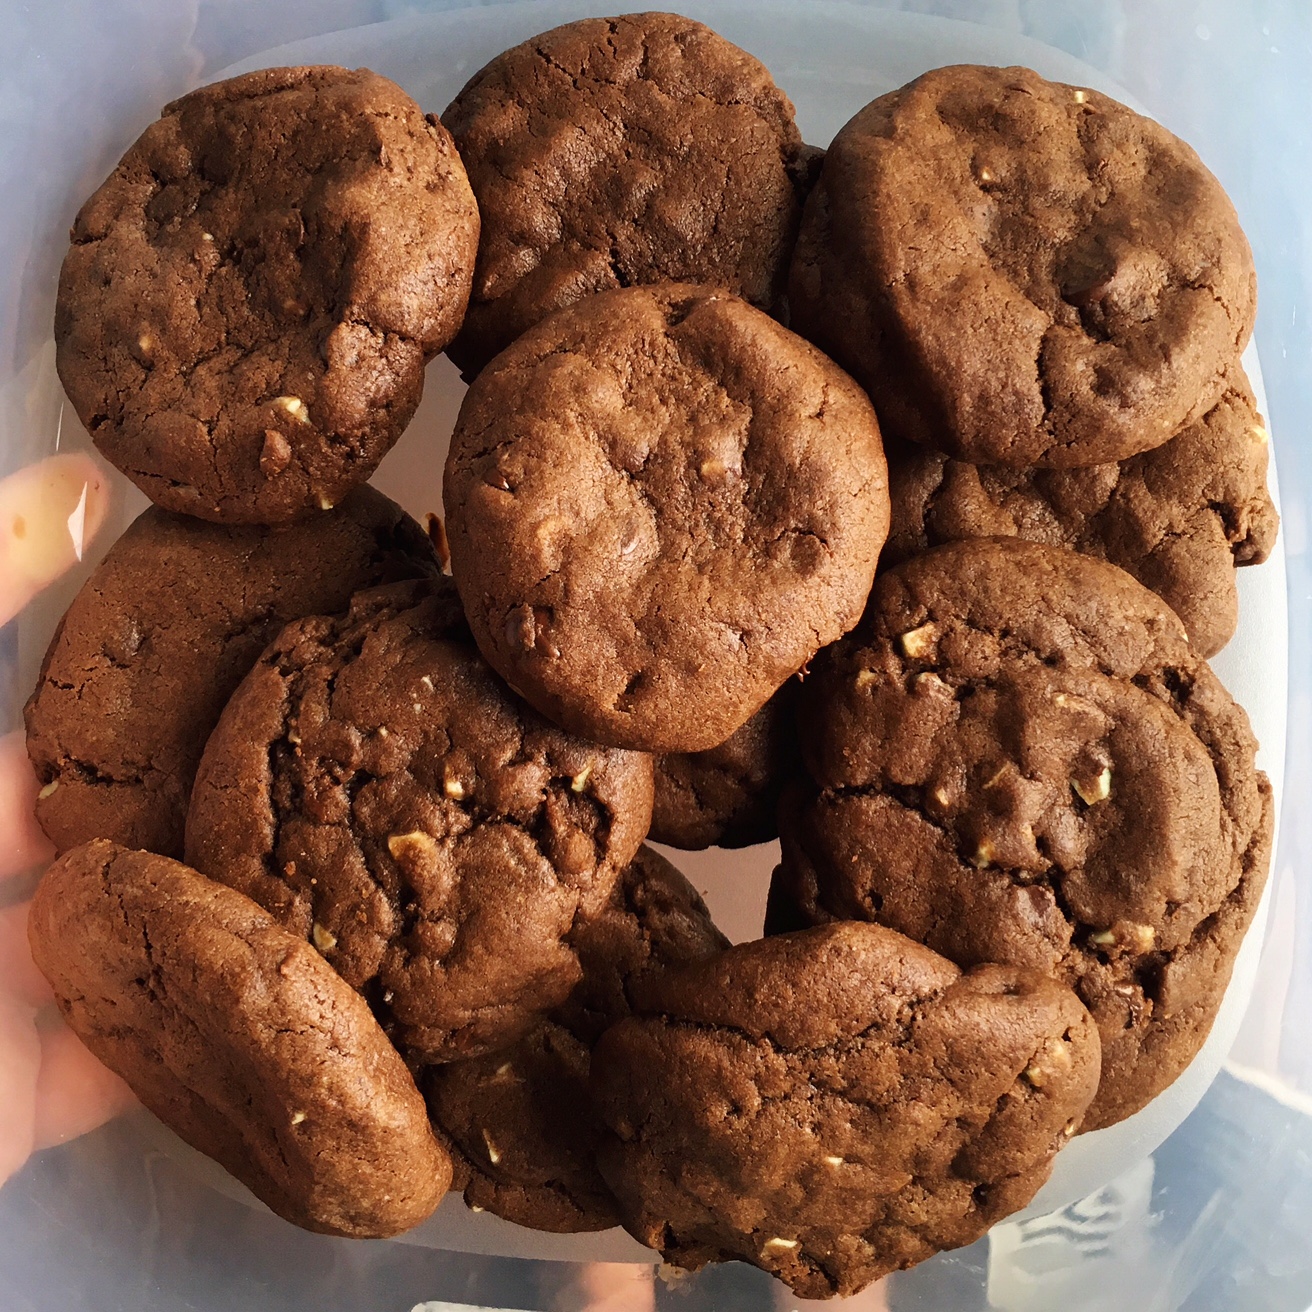 Triple chocolate mint cookies